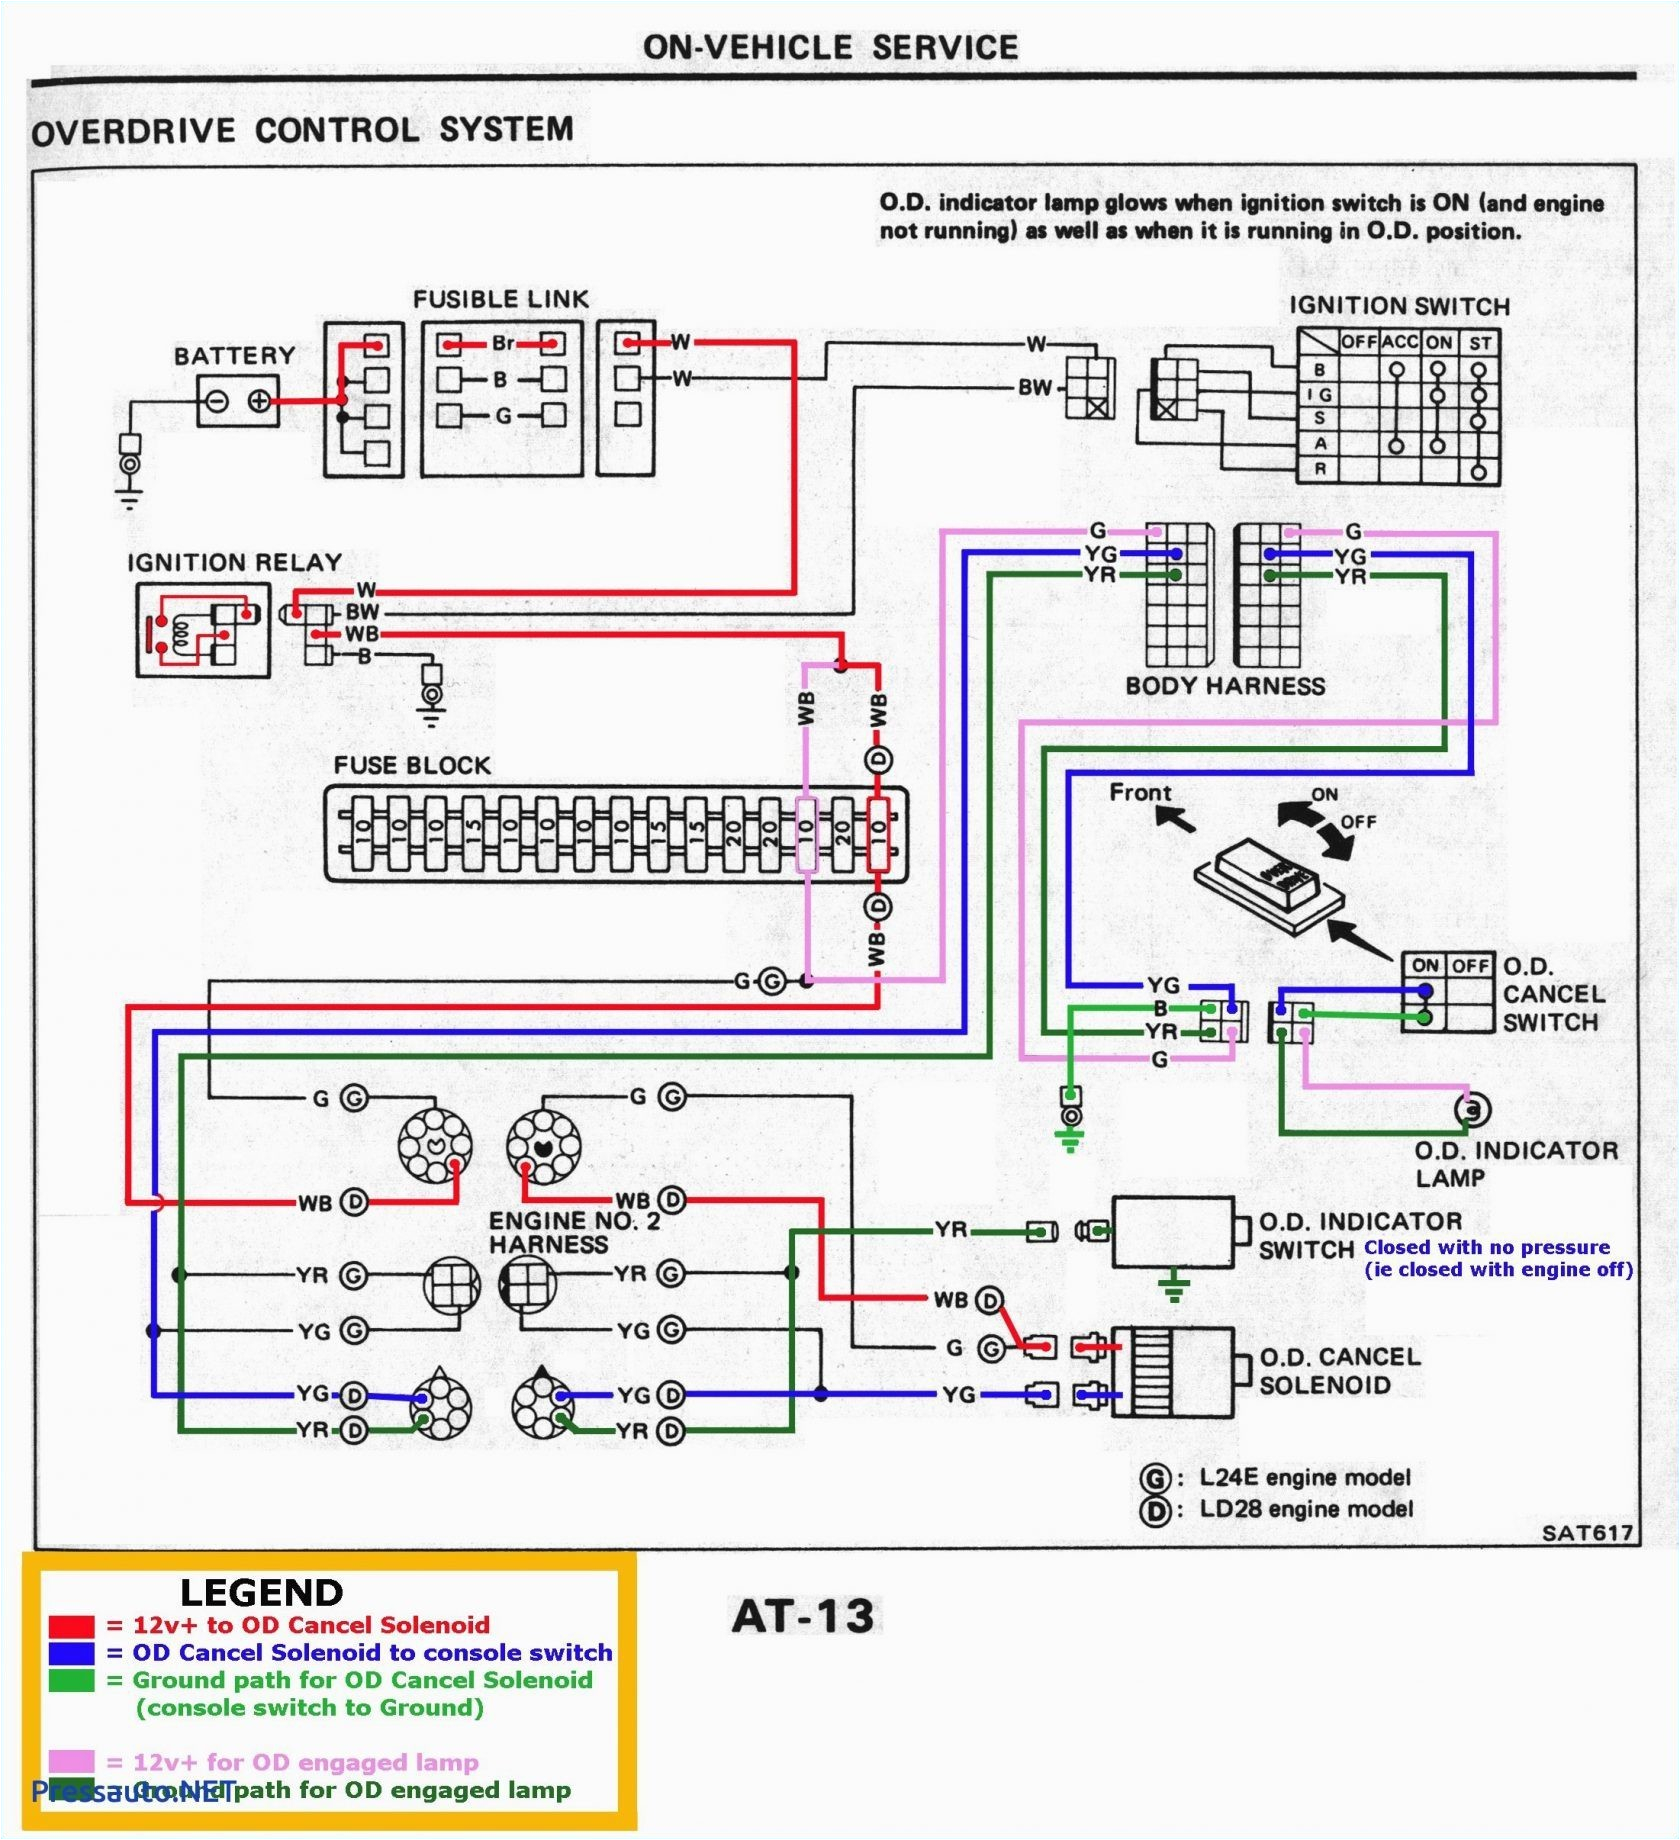 Kenwood Excelon Kdc X998 Wiring Diagram Kenwood Kdc Install Wiring Kenwood Circuit Diagrams Wiring Diagram